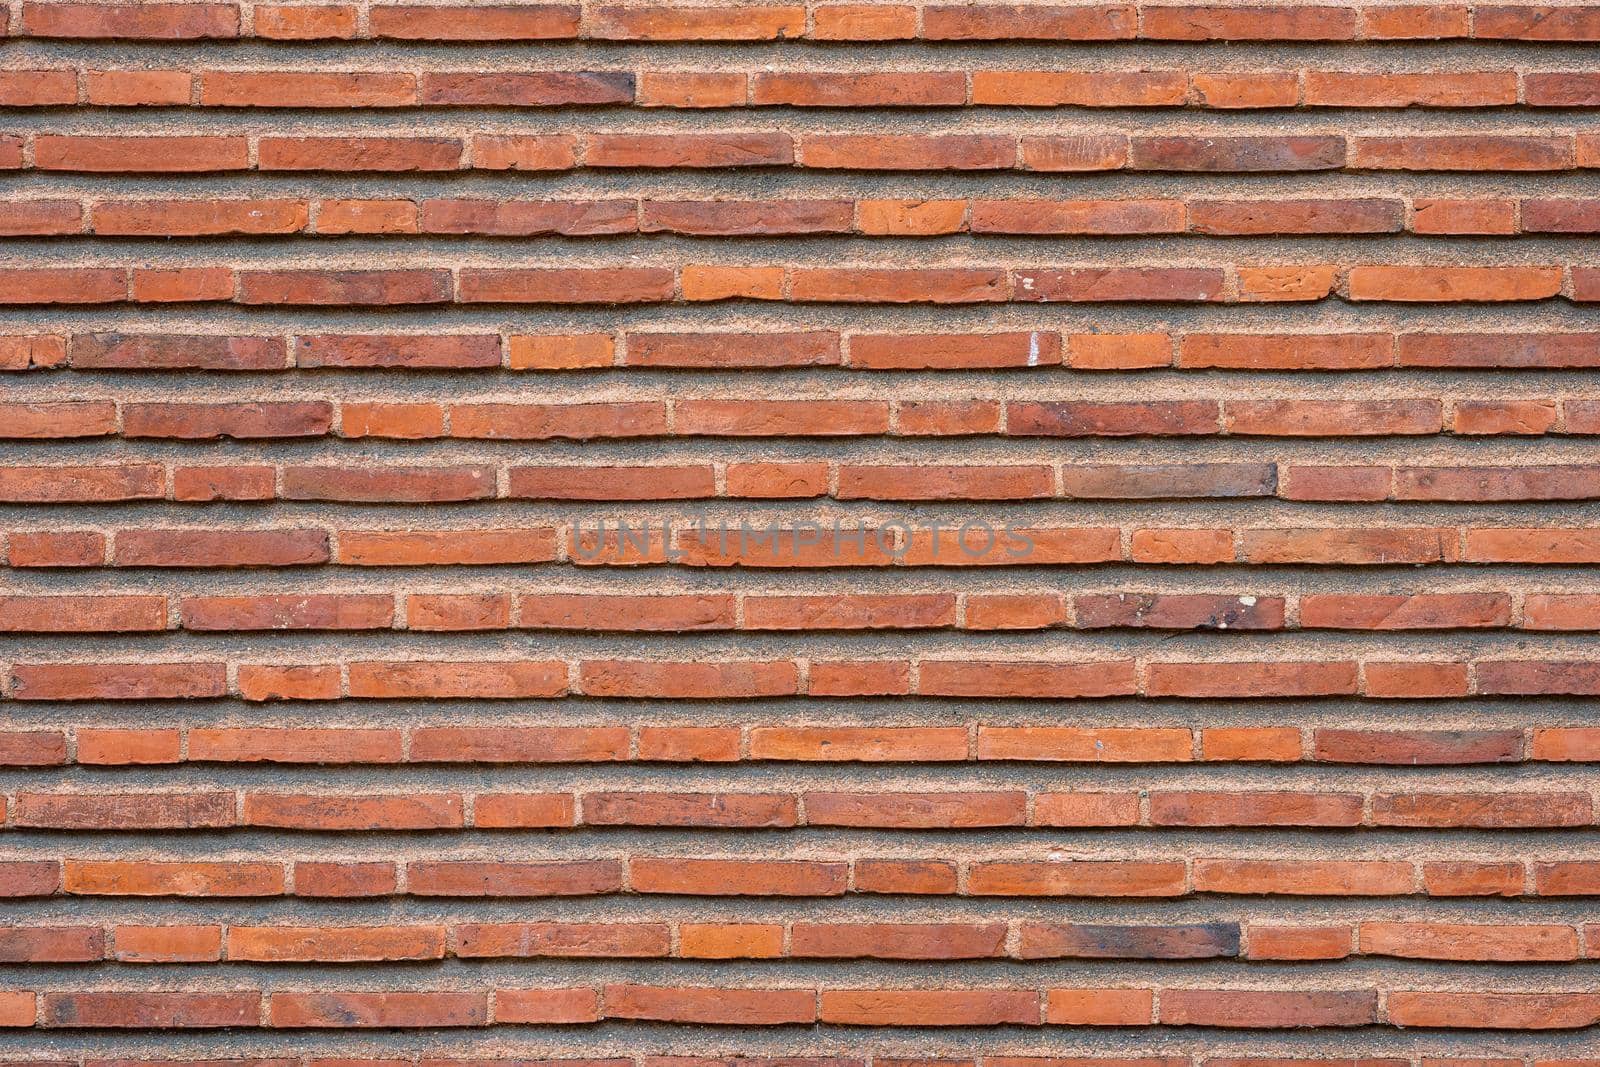 Wall made of red clinker bricks by elxeneize